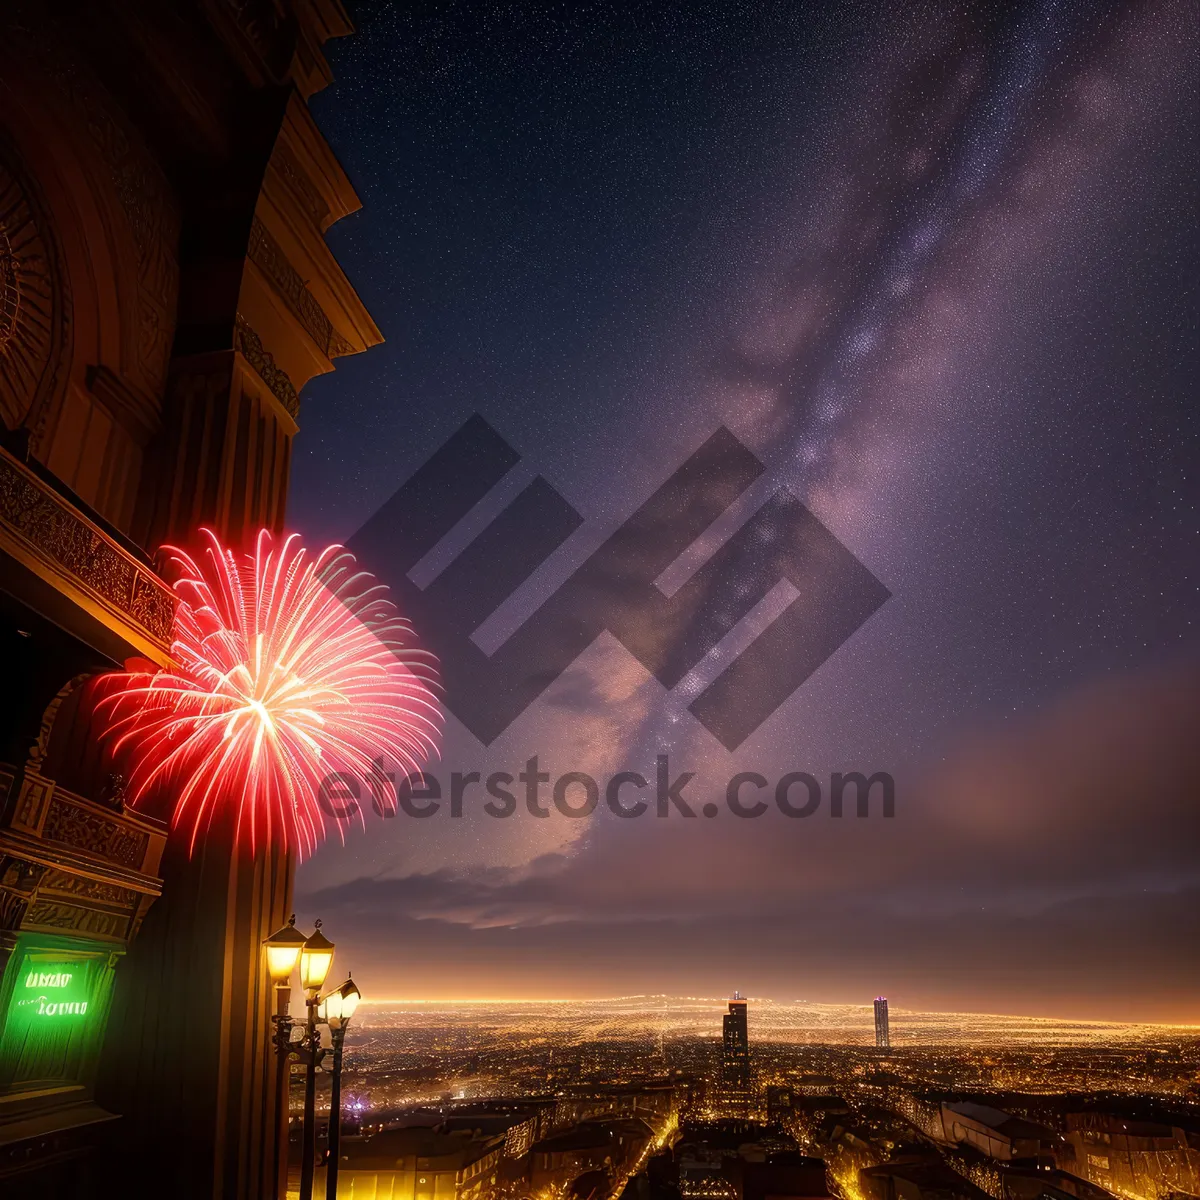 Picture of Festive Fireworks Illuminate Night Sky Above Ferris Wheel